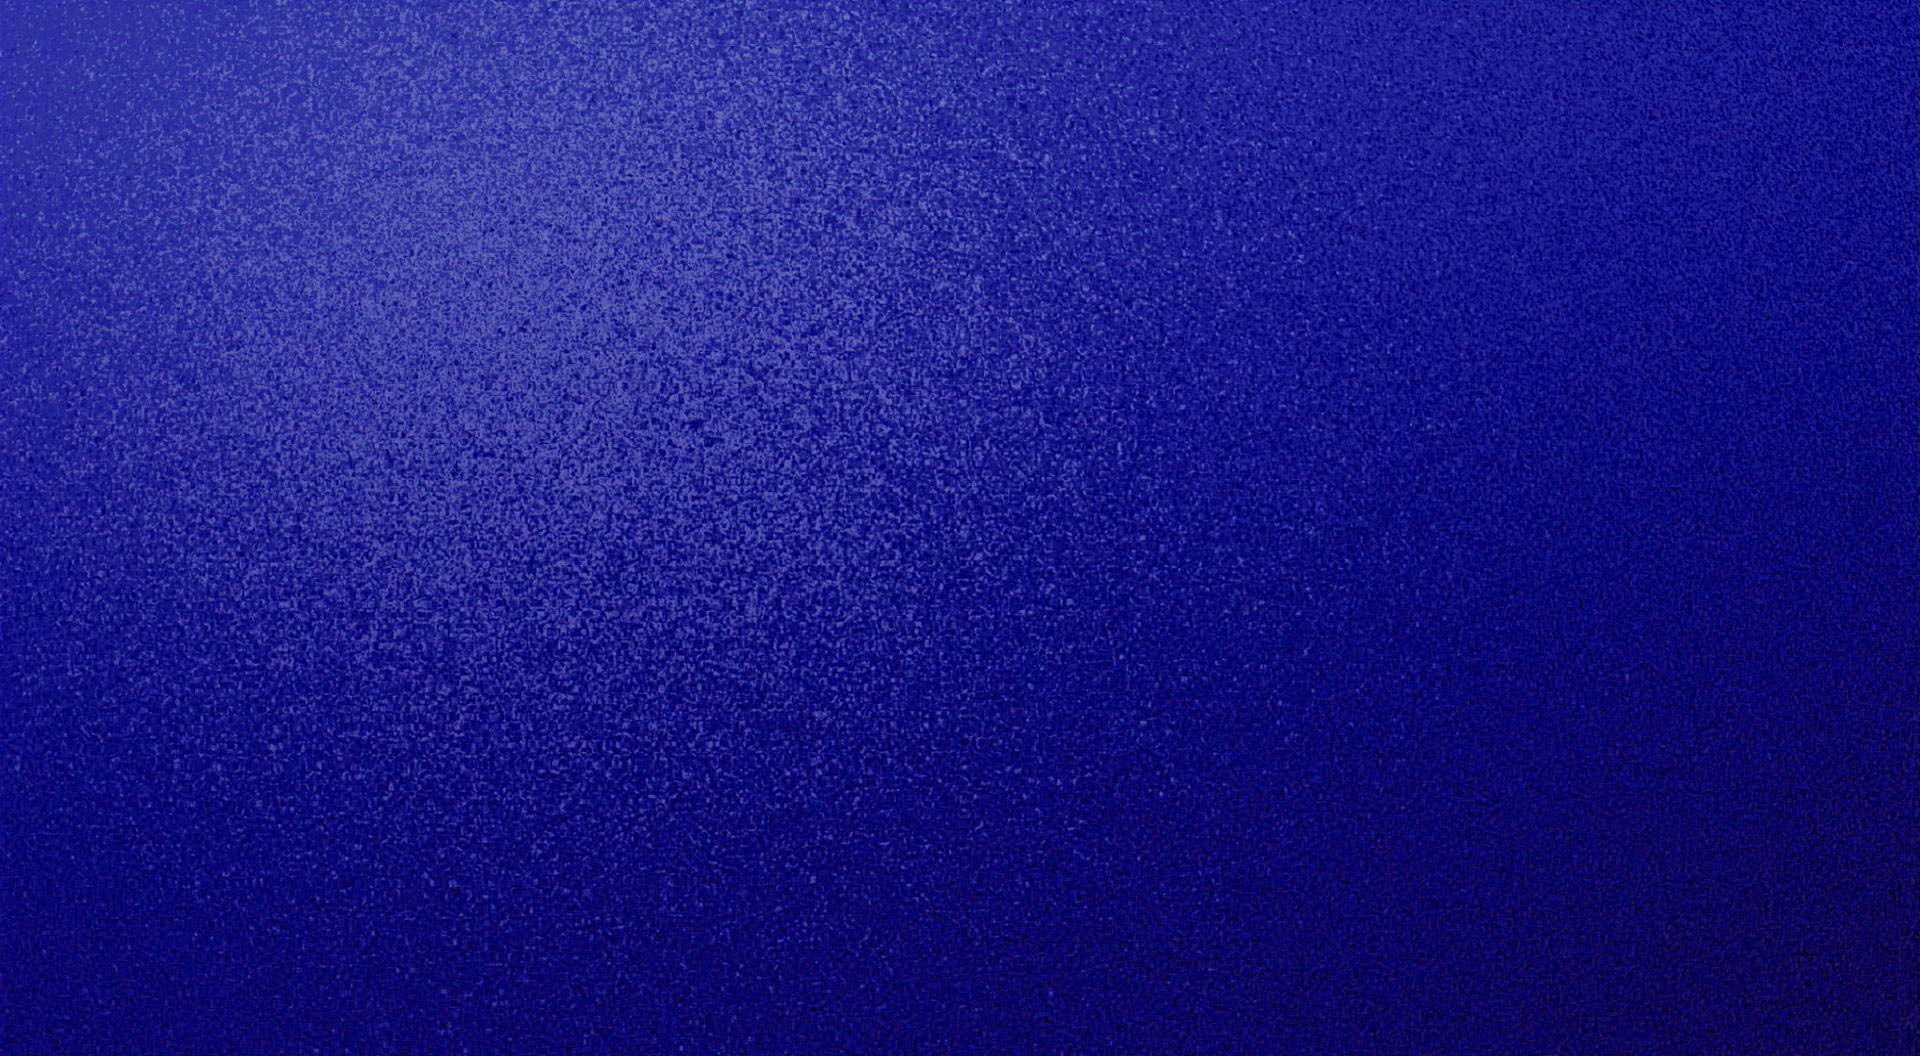 Dark Blue Backgrounds Image - Wallpaper Cave